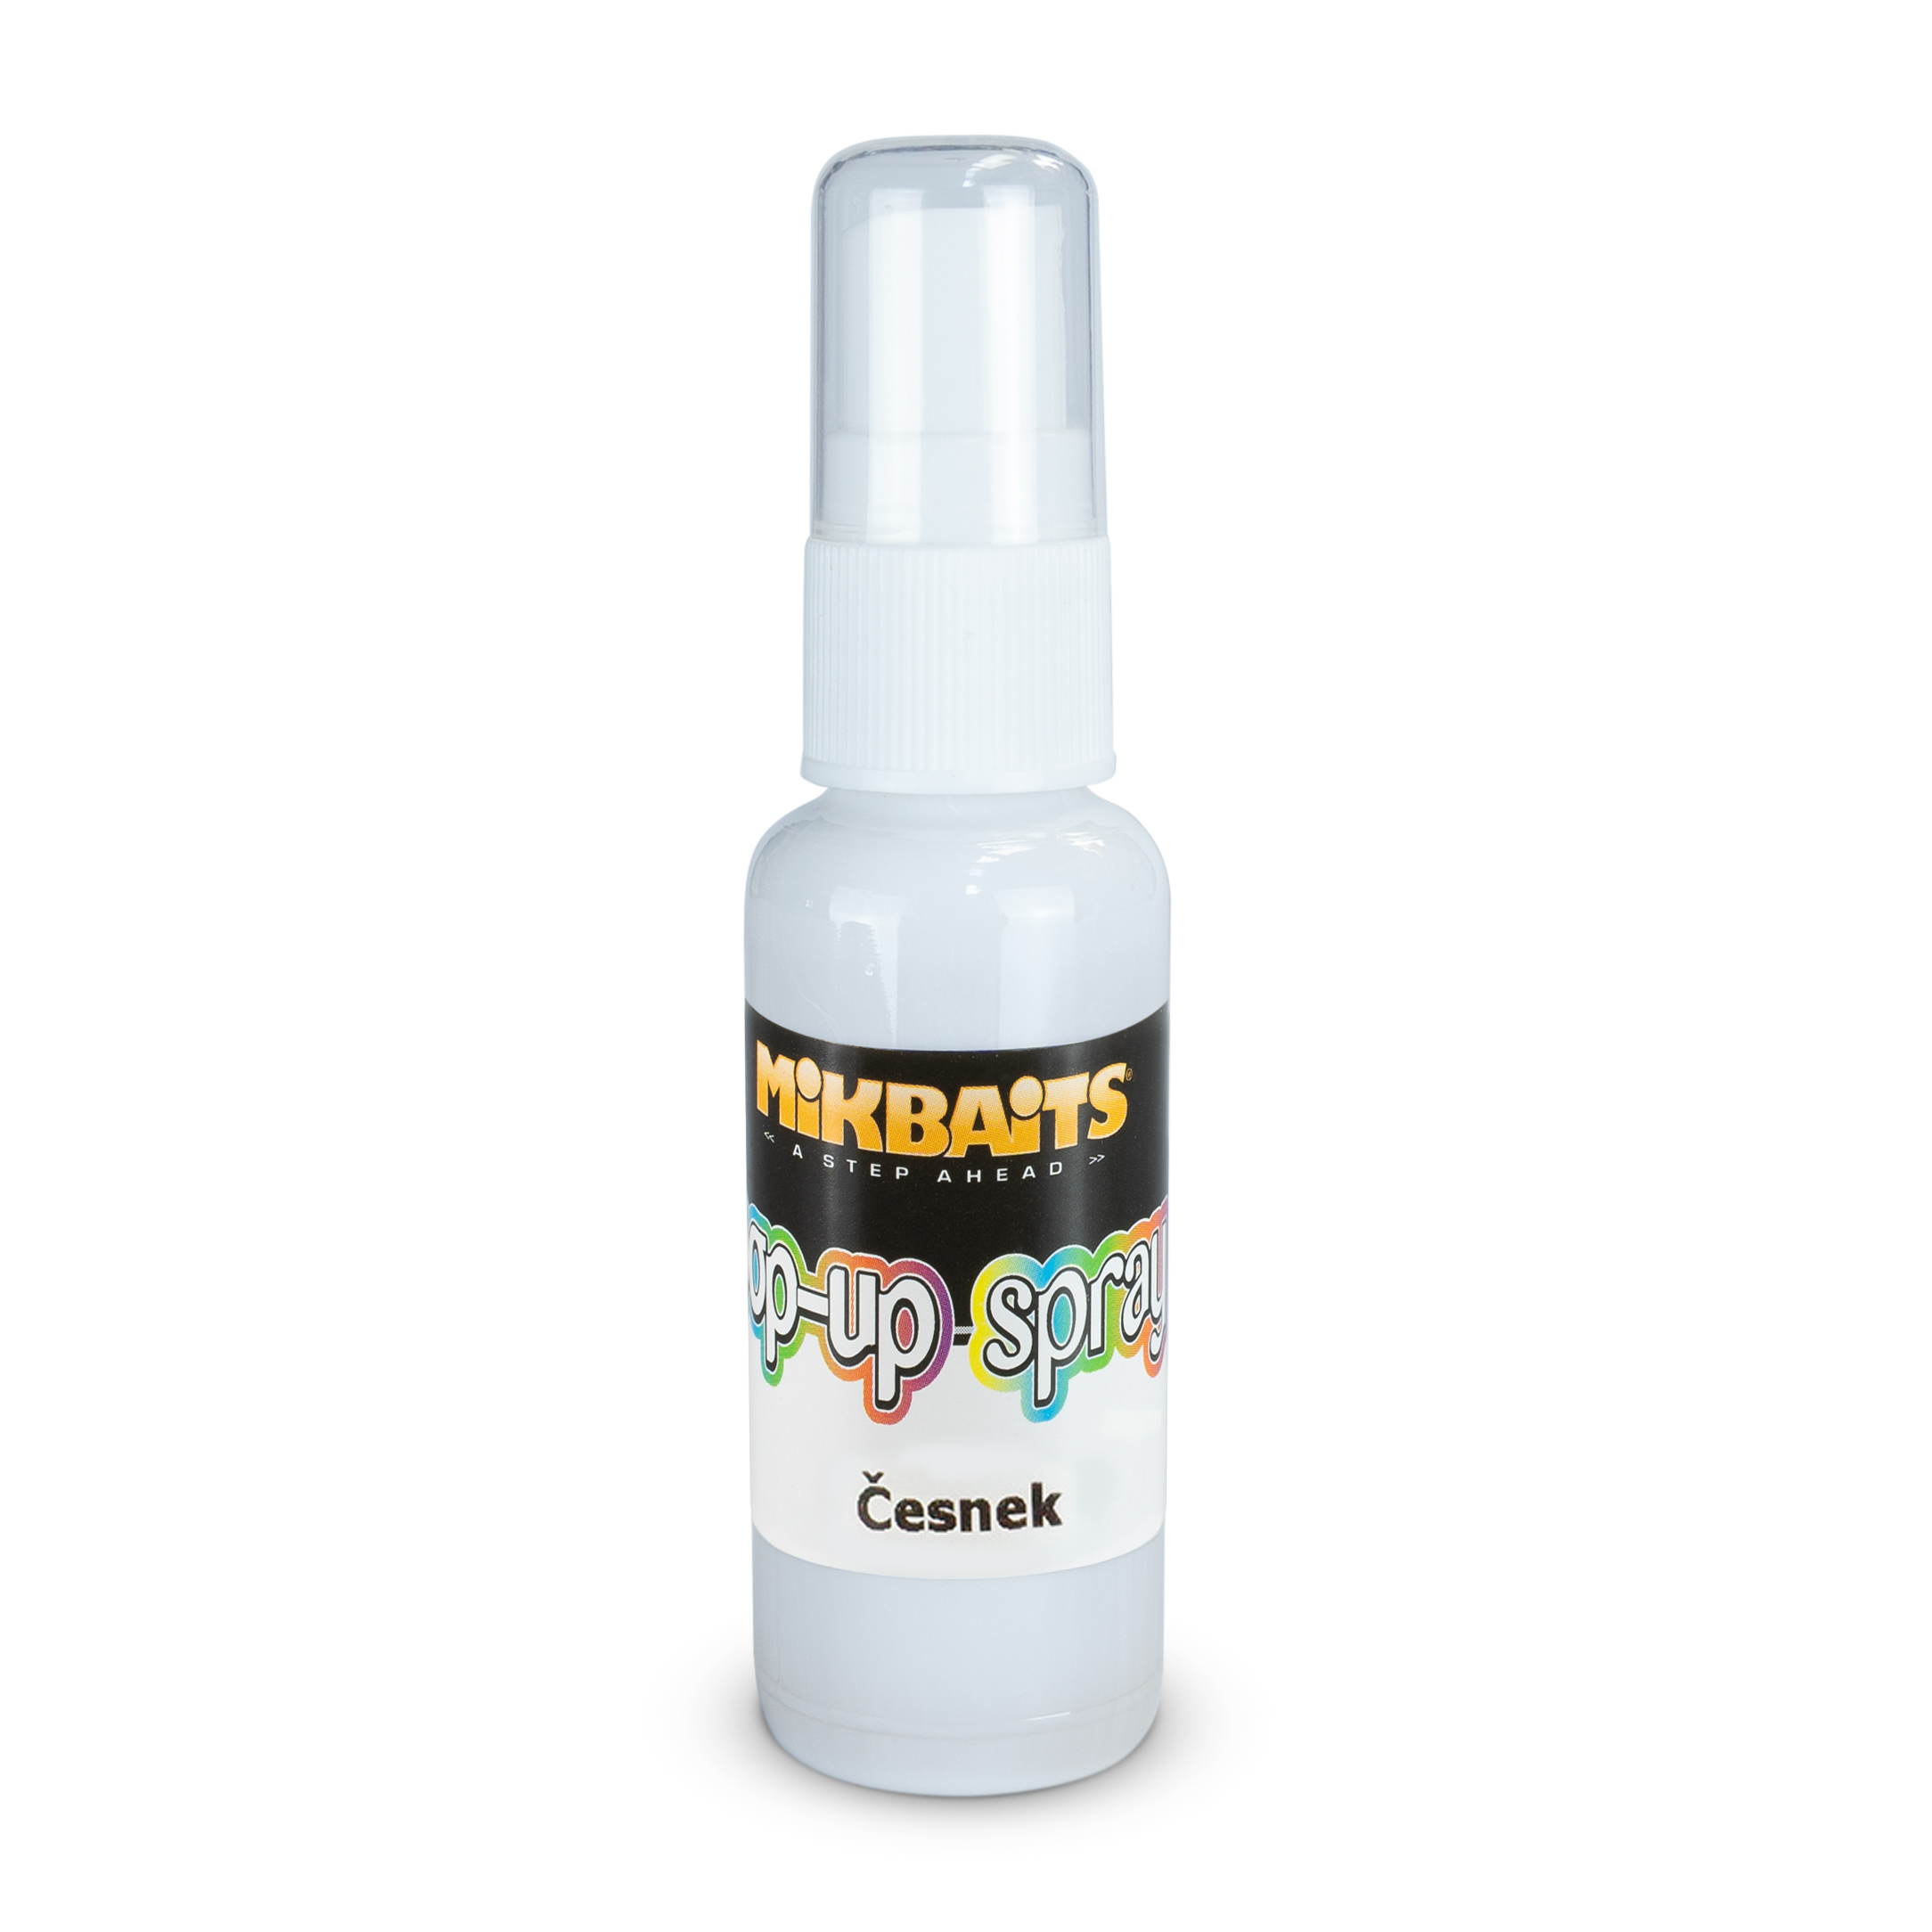 Pop-up spray 30ml - Česnek